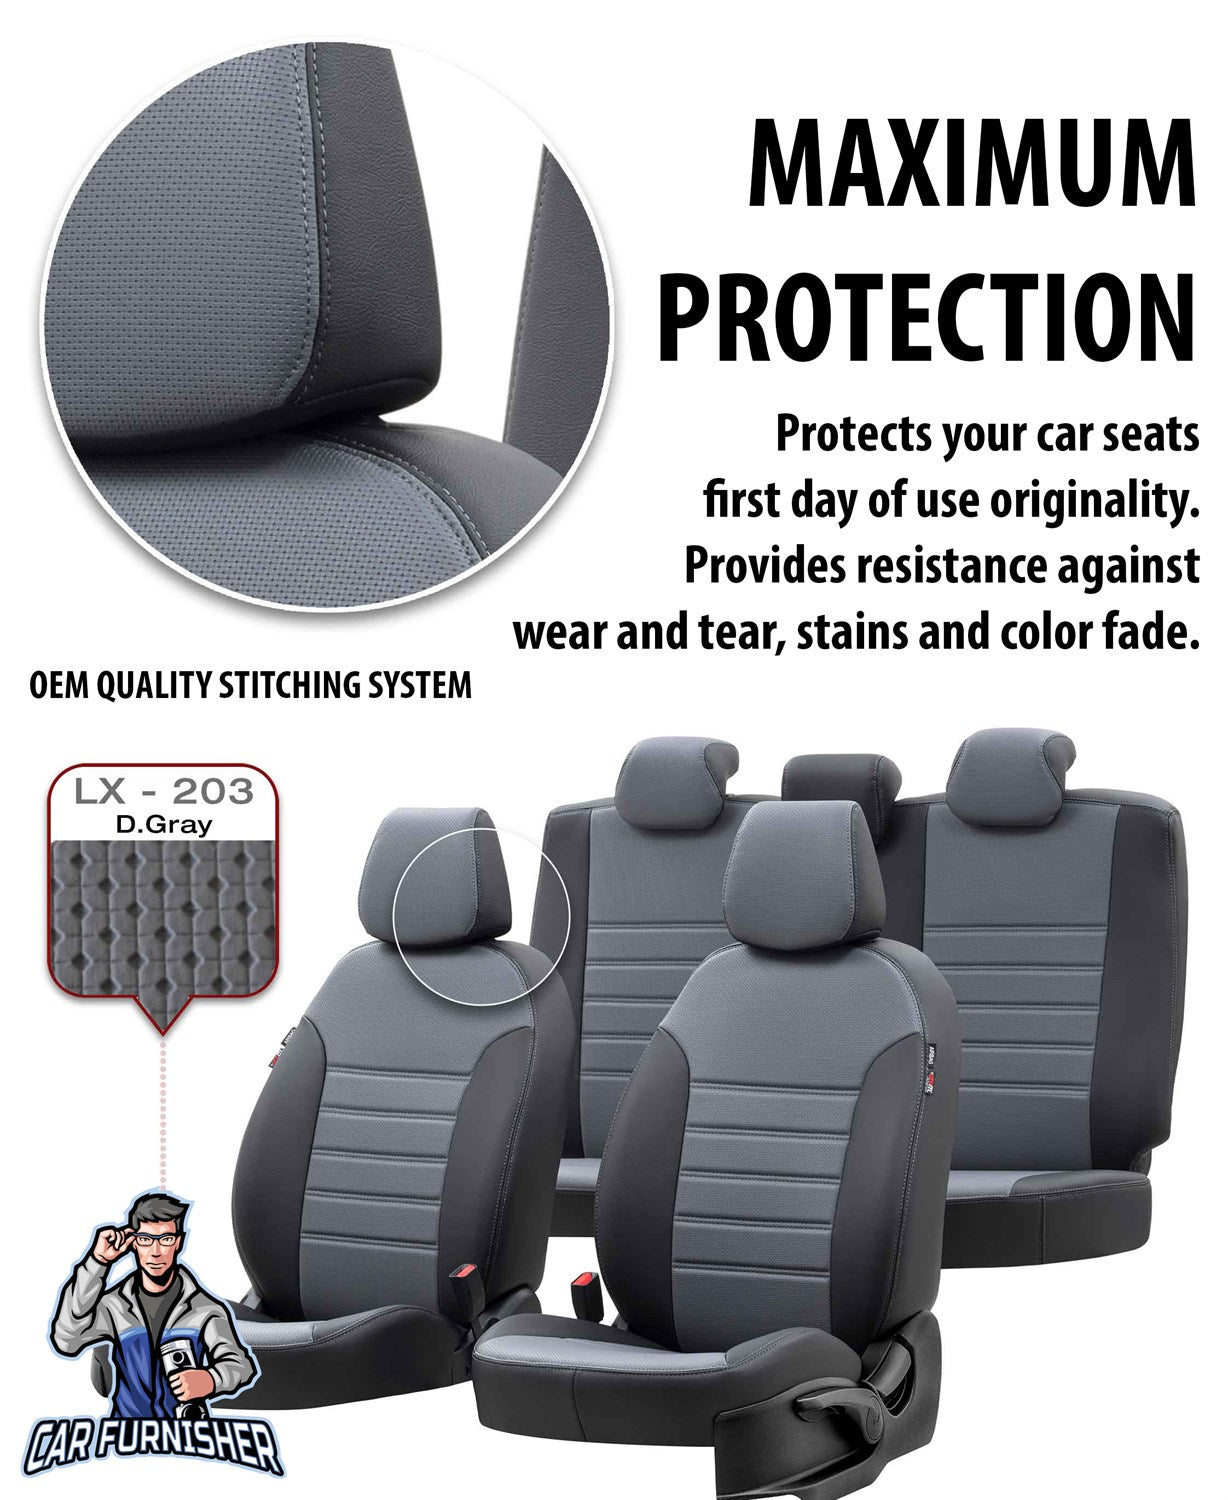 Kia Cerato Seat Covers New York Leather Design Smoked Black Leather